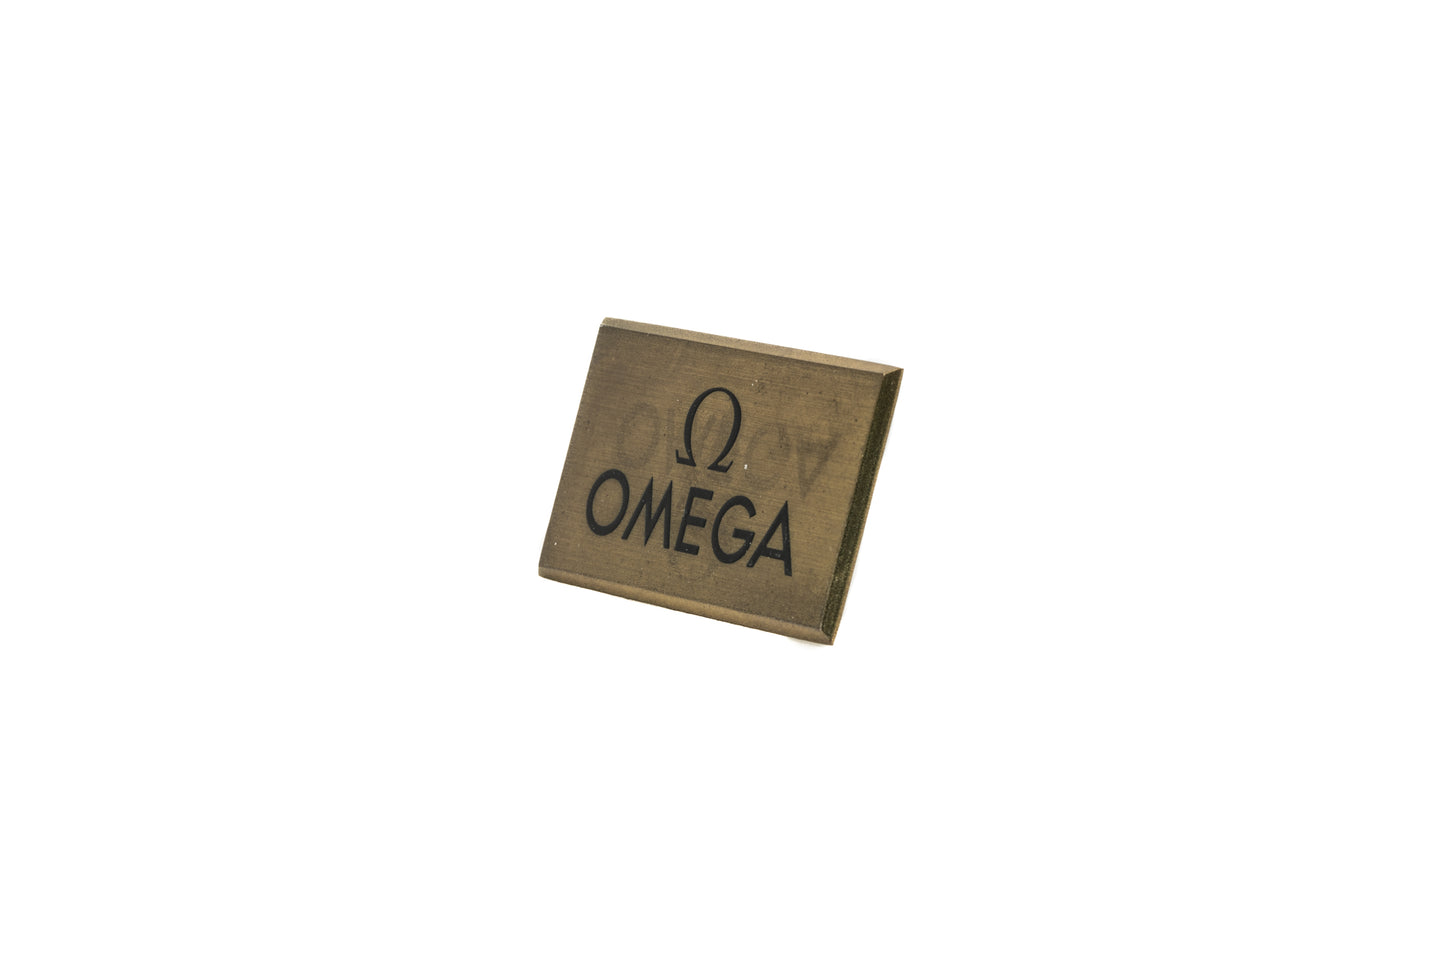 Omega Brass Signage